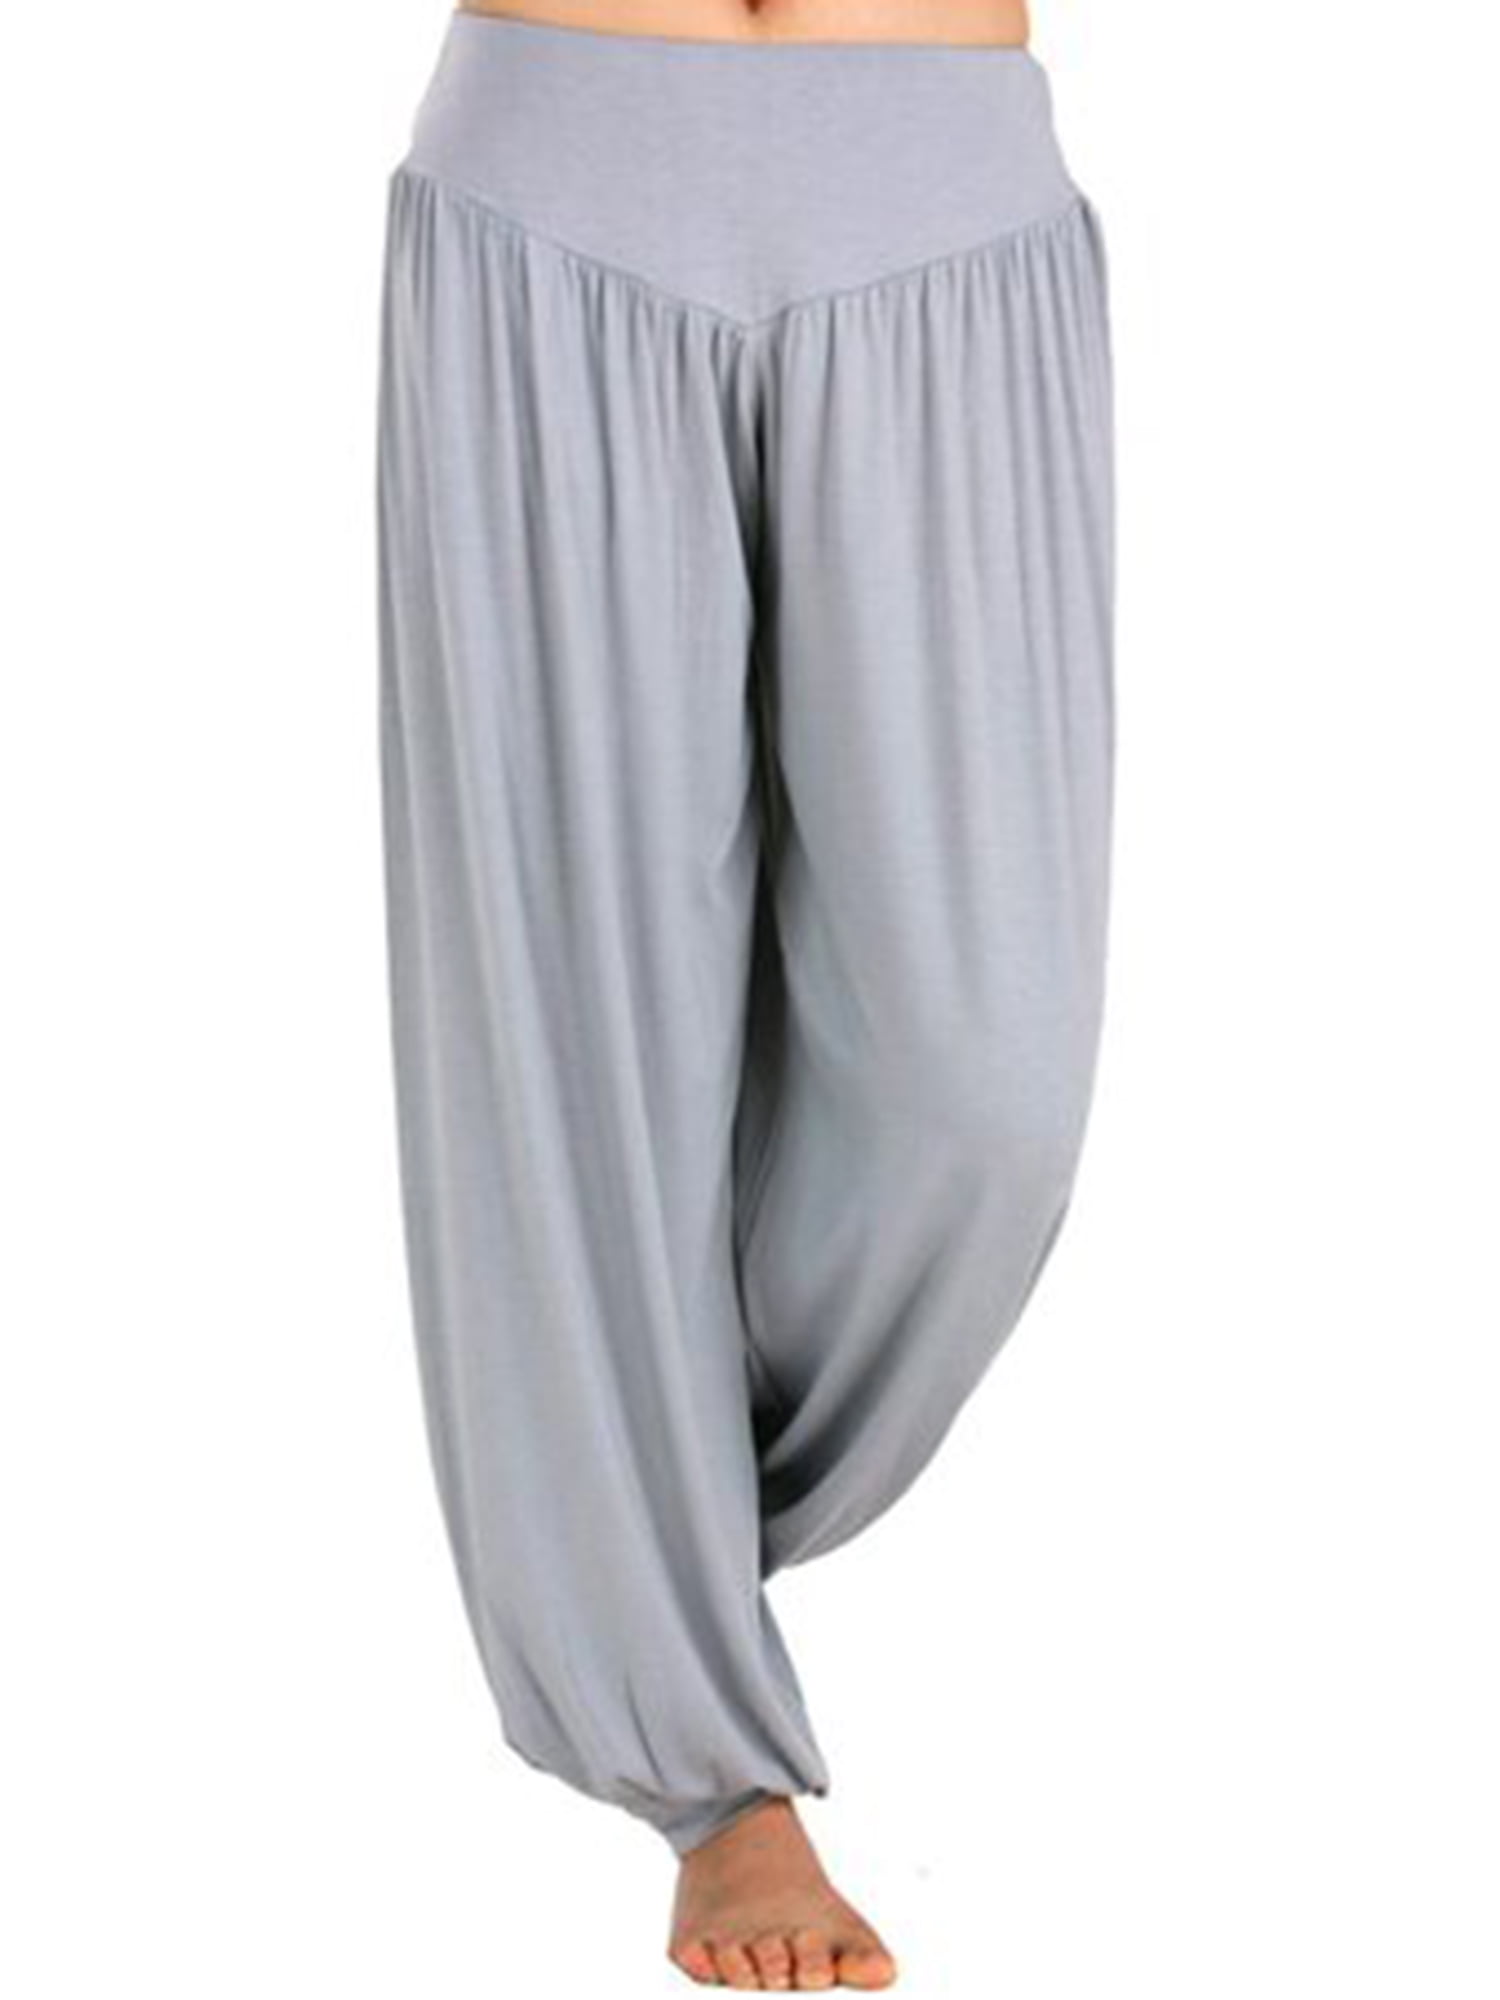 Harem Pants for Men High Waist Yoga Workout Casual Loose Soft Modal Pilates Pants Hippie Harem Casual Pants 